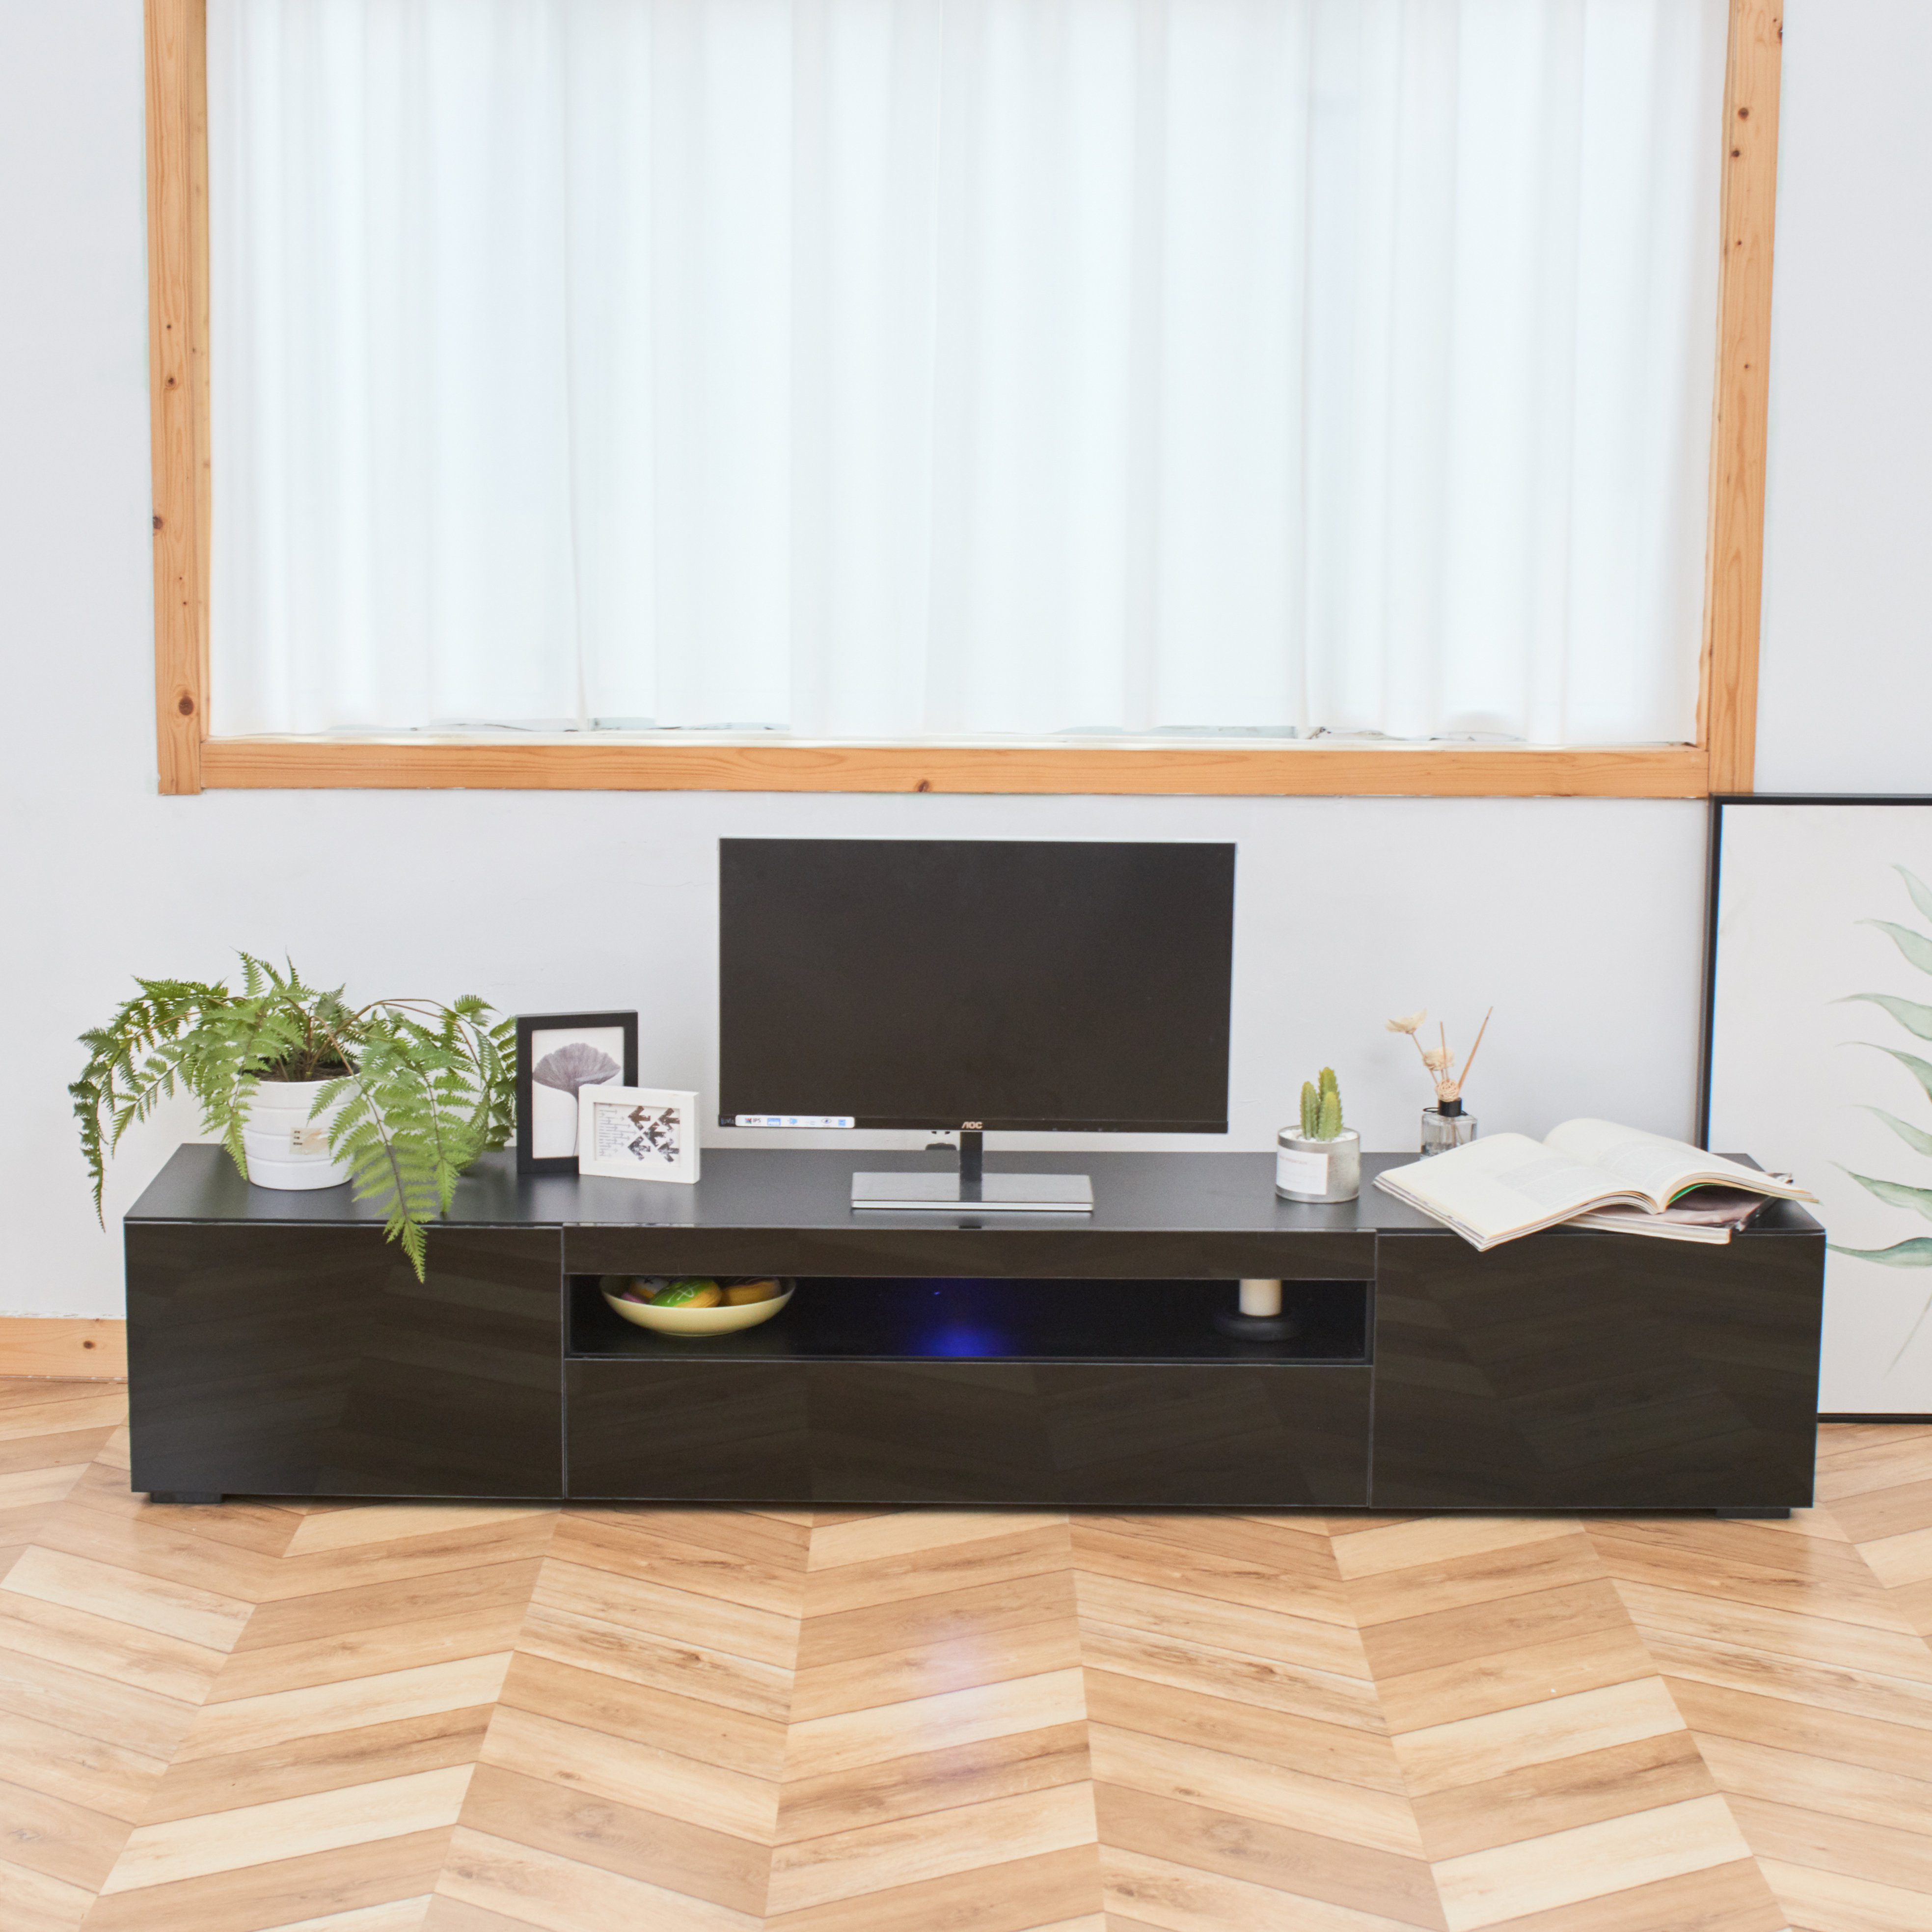 China China Supplier Outdoor Modular Furniture Cabinet Hot Sale Modern Elegance Style Tv Cabinet For Living Room Joysource Manufacturer And Supplier Joysource